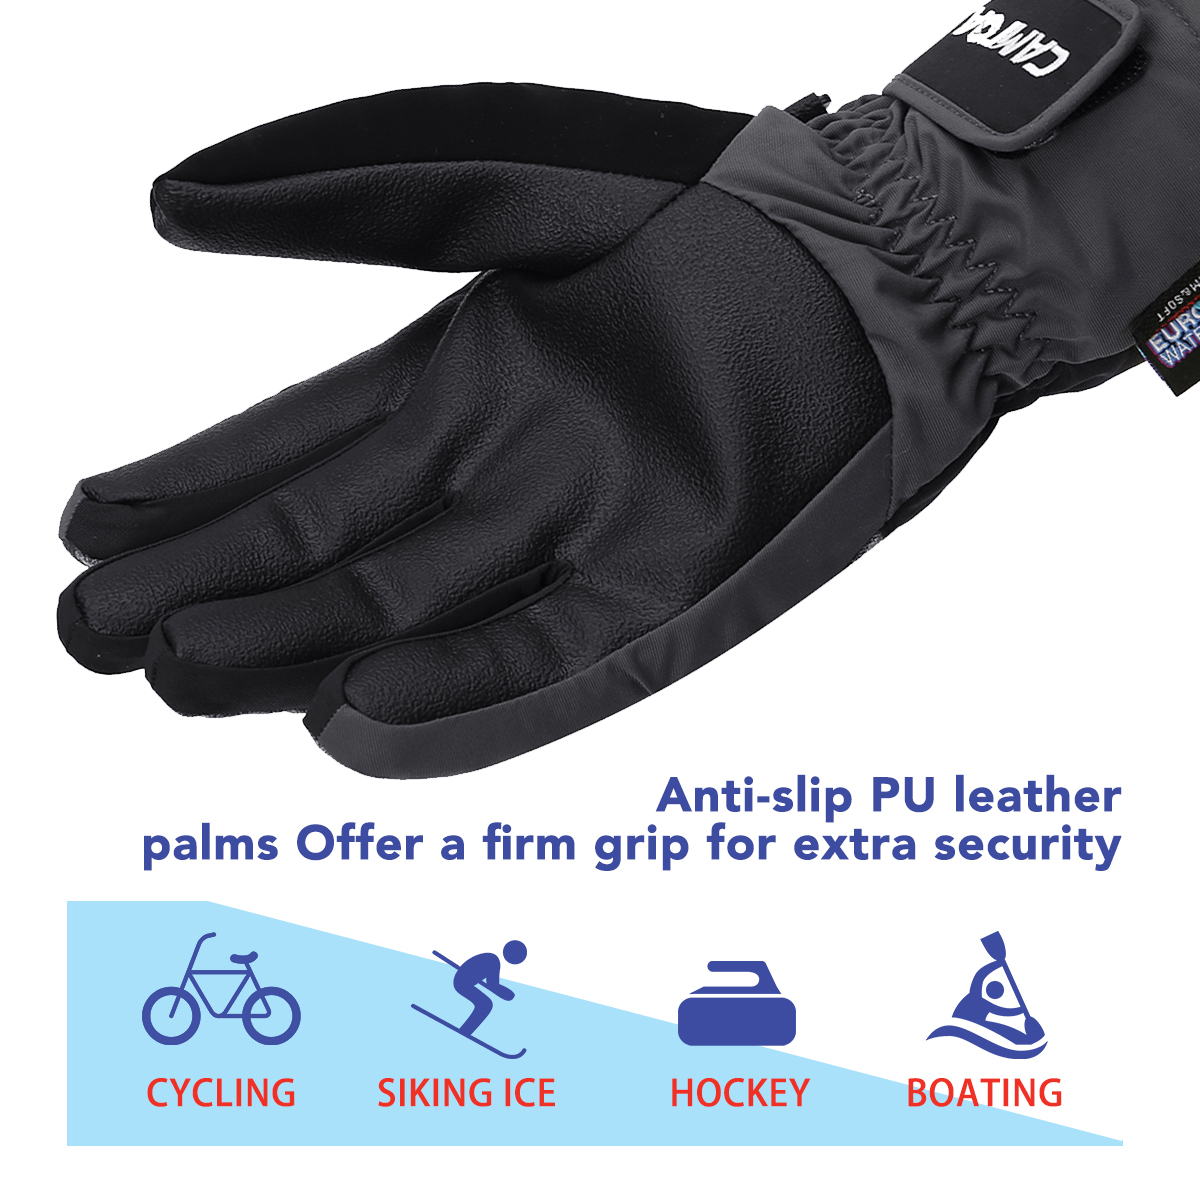 Camtoa-Ski-Gloves-Winter-Gloves-for-Men-Women-3M-Thinsulate-Warm-Waterproof-Breathable-Snow-Gloves-1402204